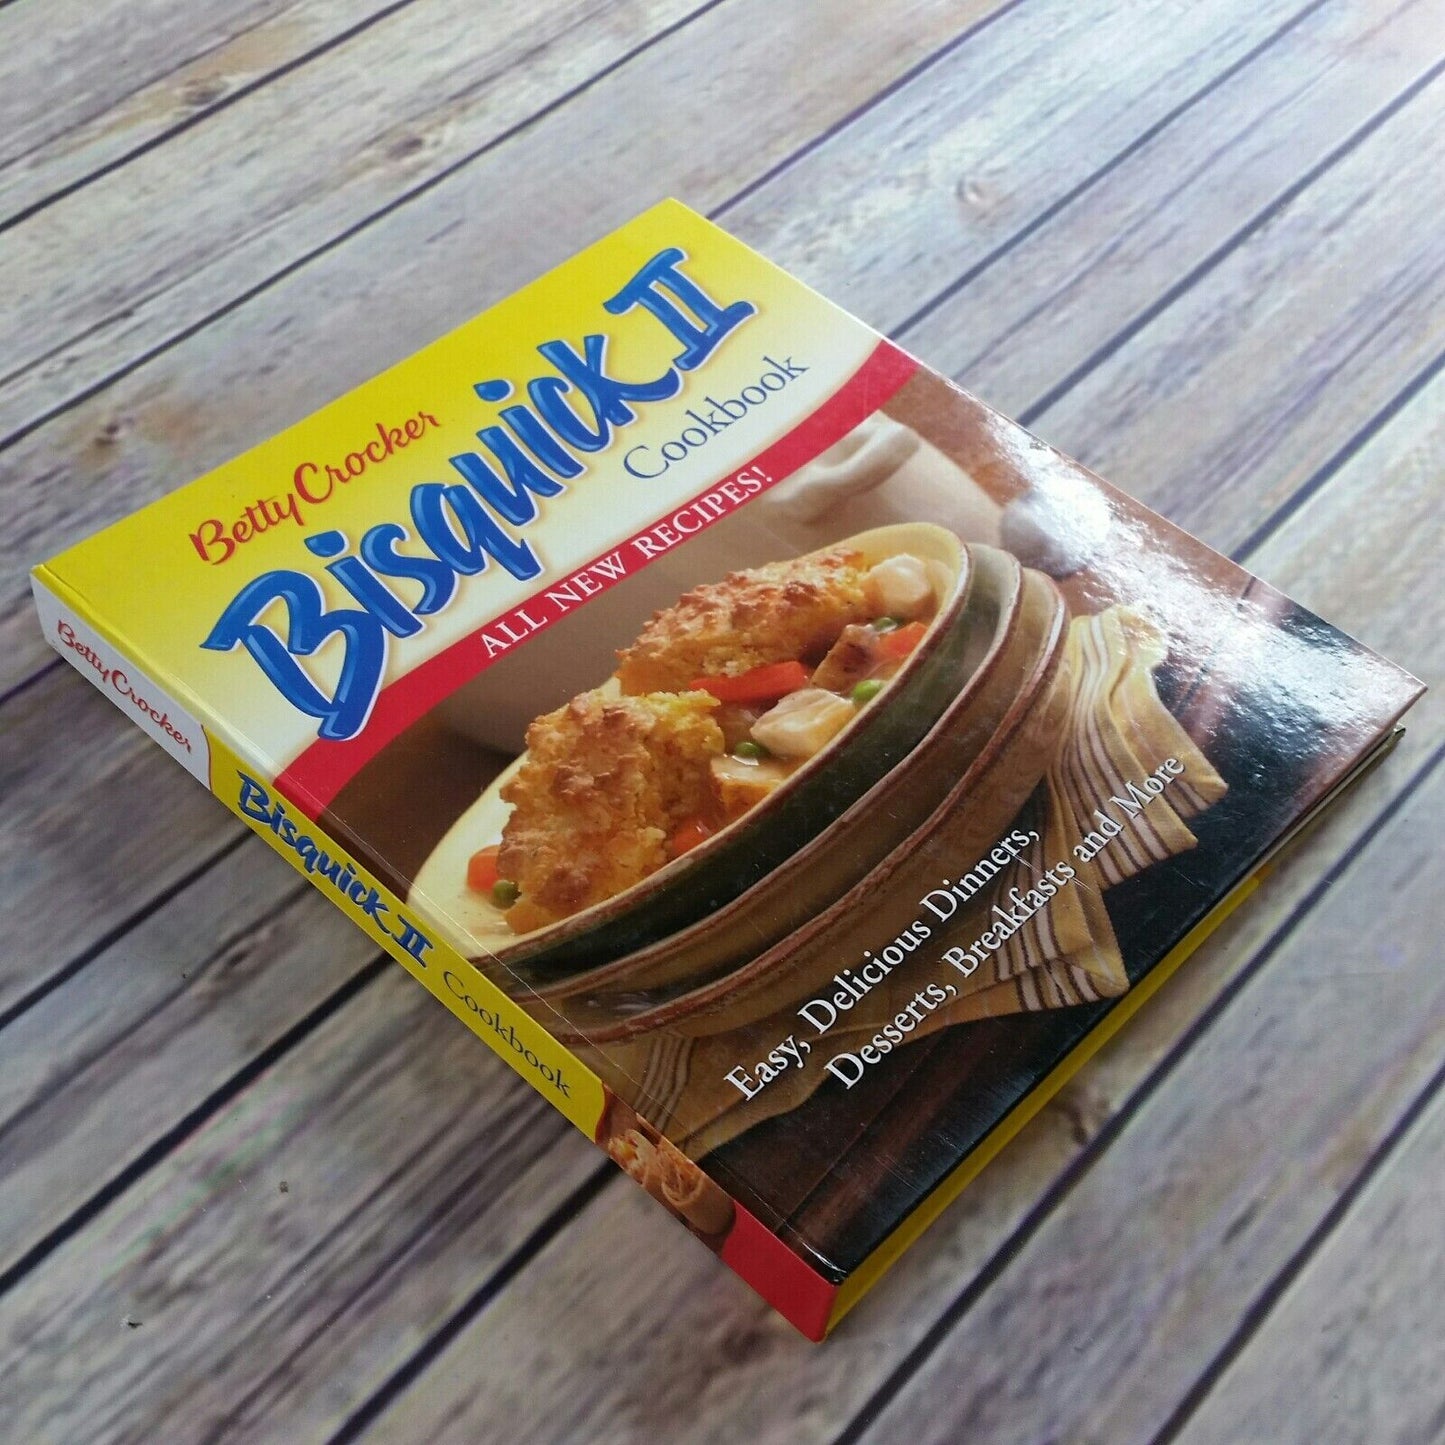 Bisquick II Cookbook 2004 Betty Crocker Hardcover Spiral All New Recipes